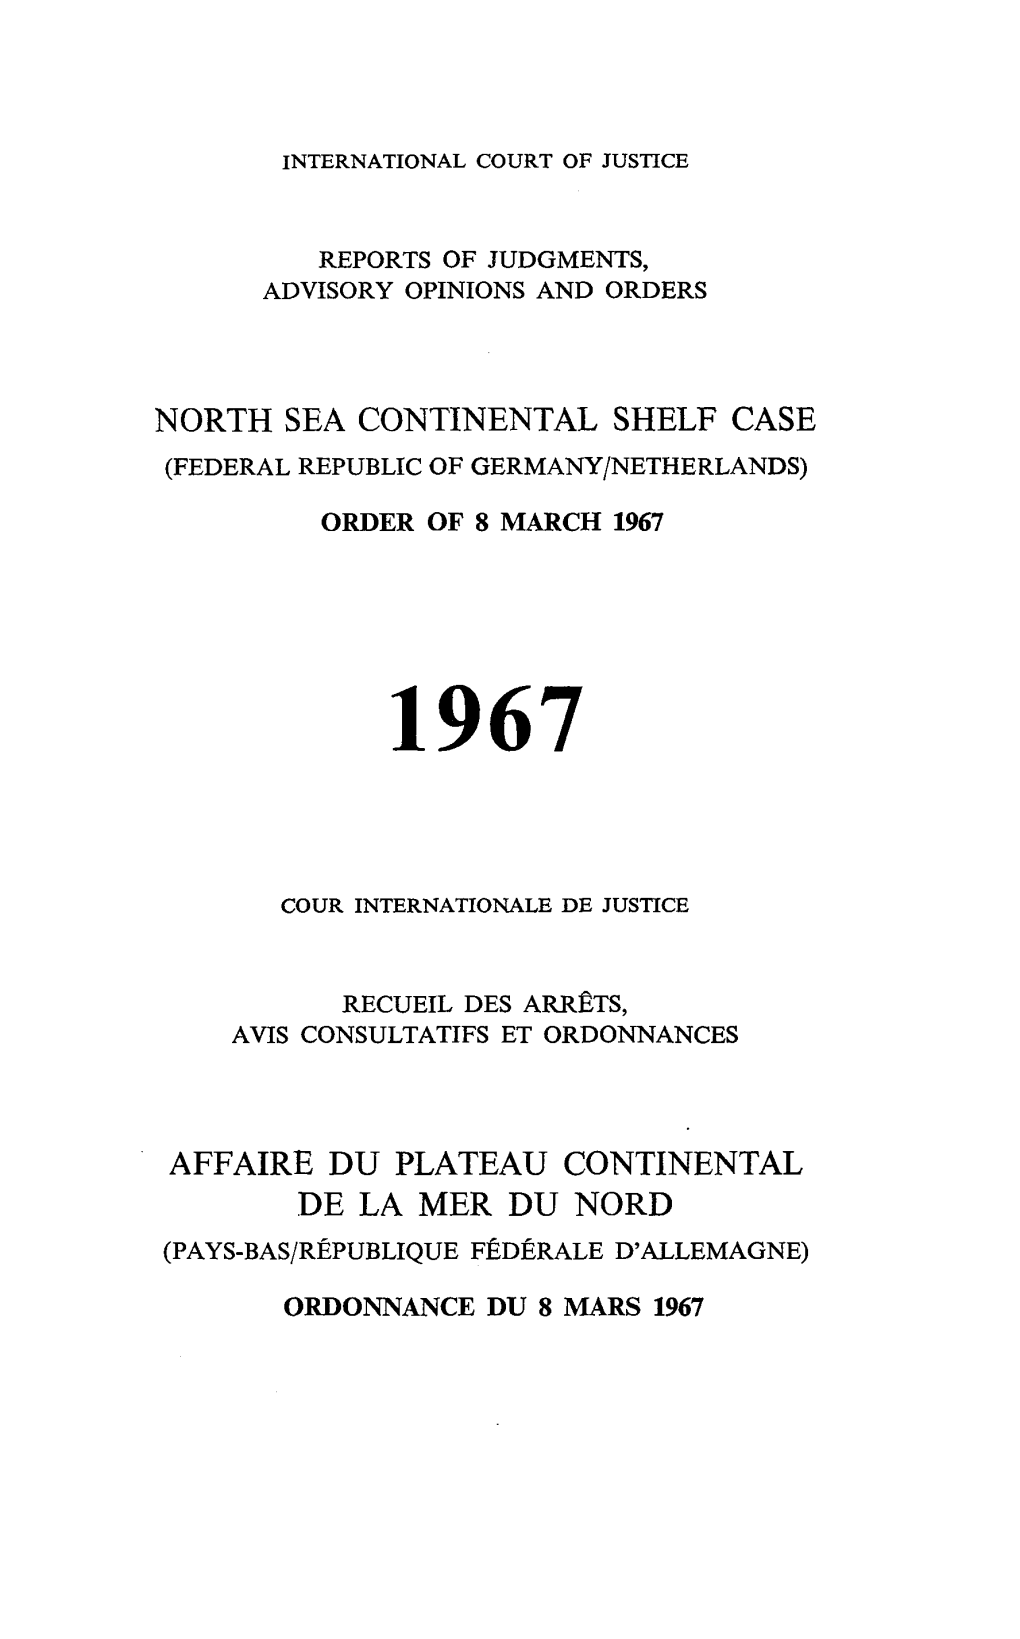 North Sea Continental Shelf Case Affaire Du Plateau